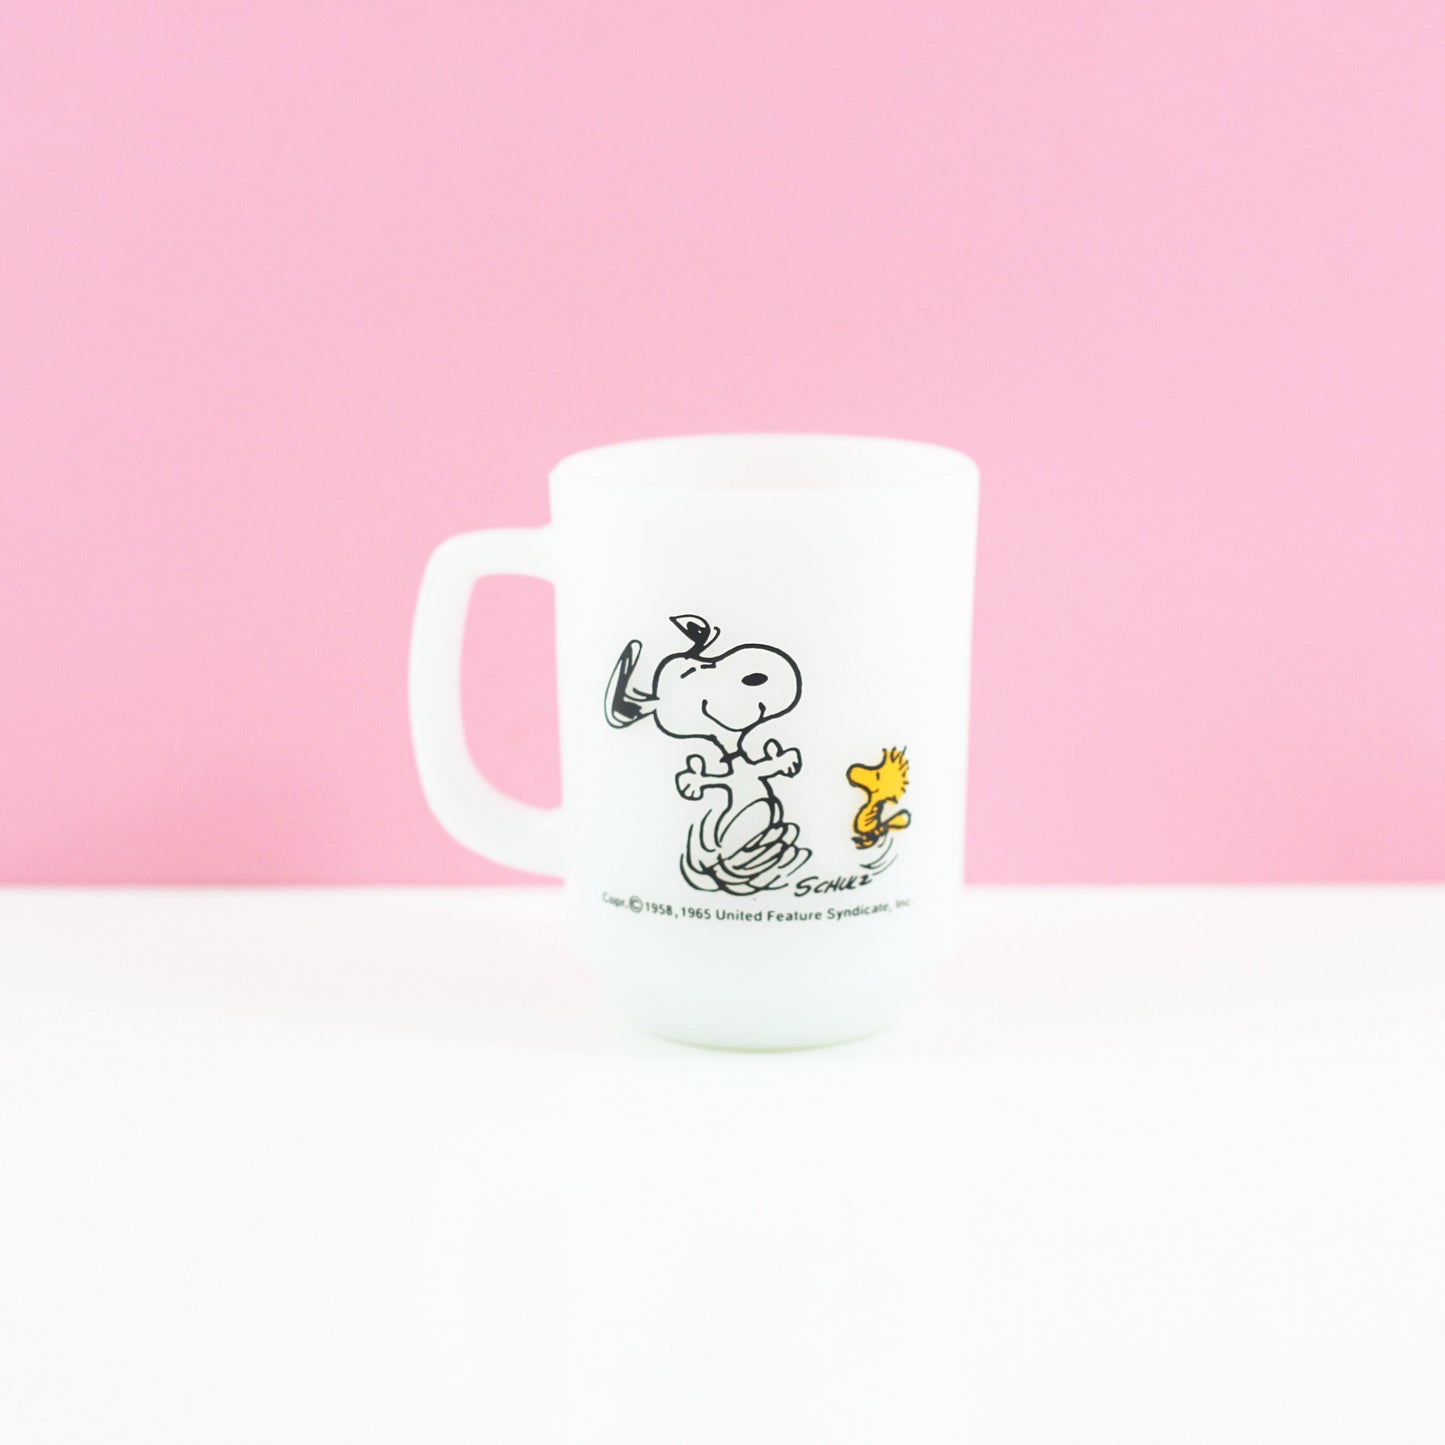 SOLD - Vintage 1965 Peanuts Milk Glass Mug - At Times Life is Pure Joy!